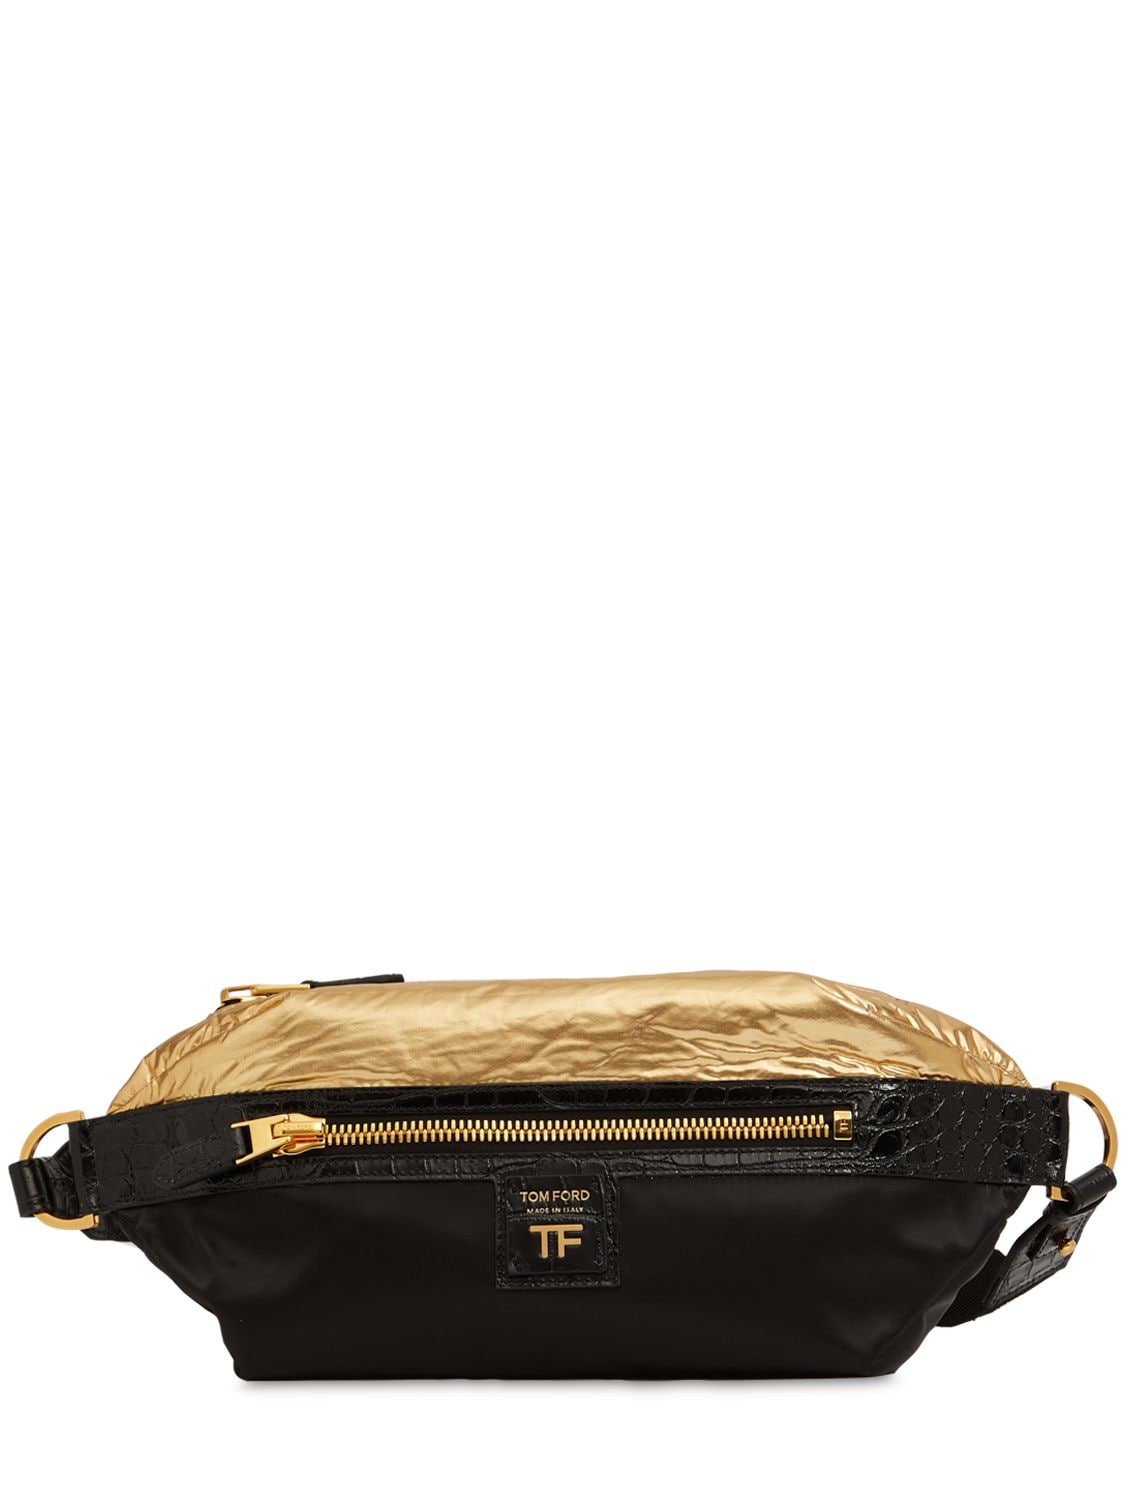 Tom Ford Metallic And Stamped Croc Belt Bag In Gold & Black